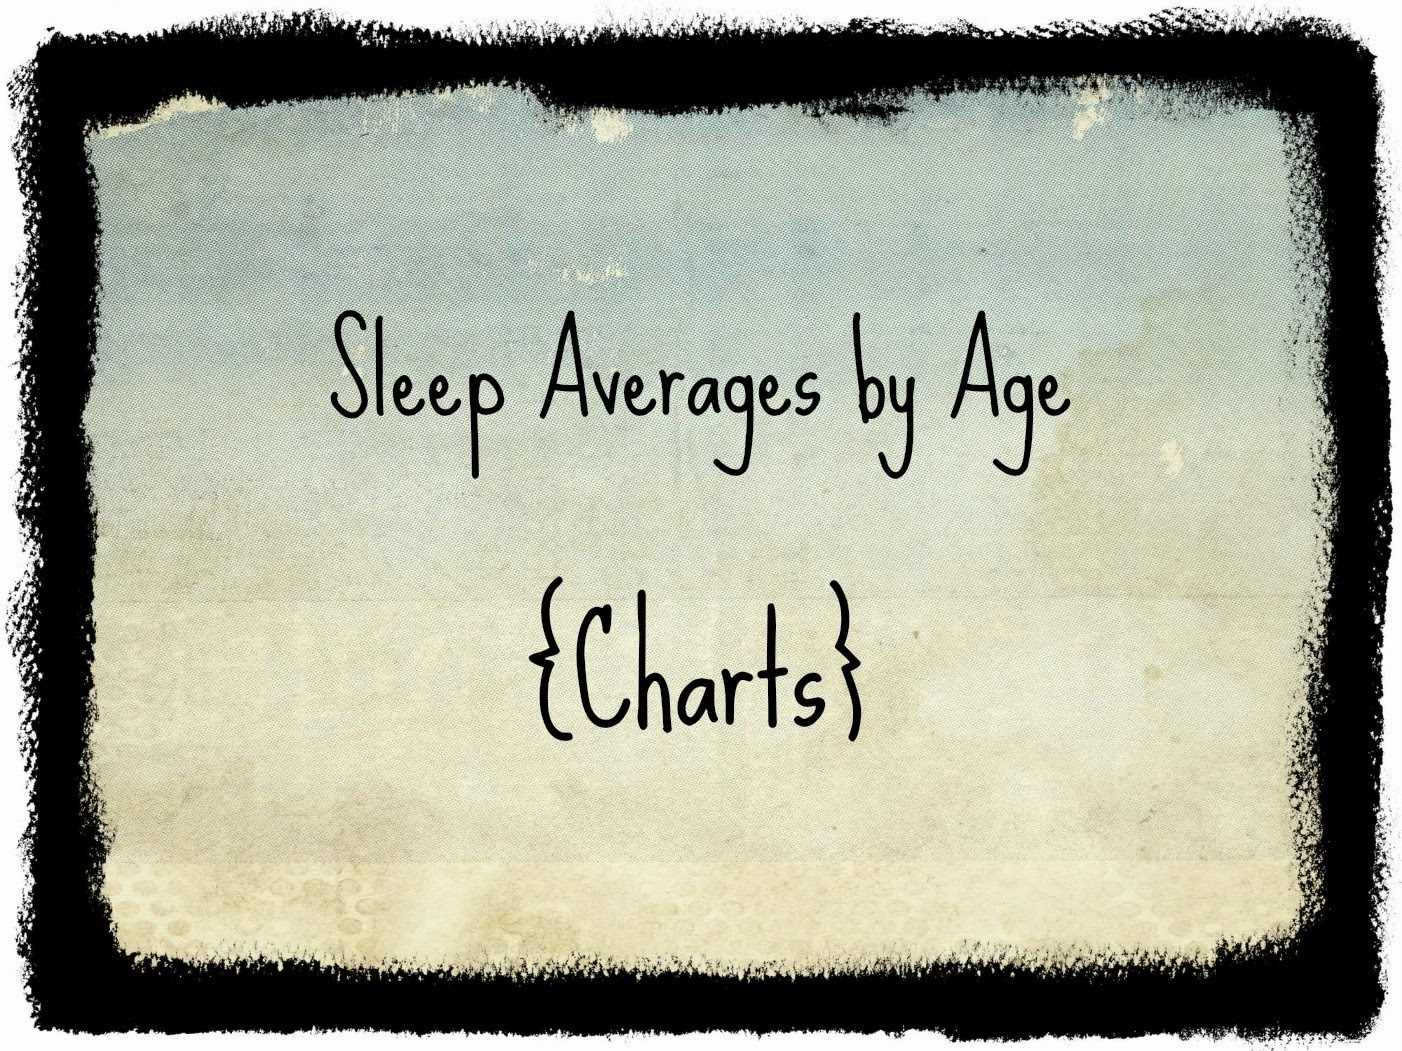 Baby Sleep Chart By Age